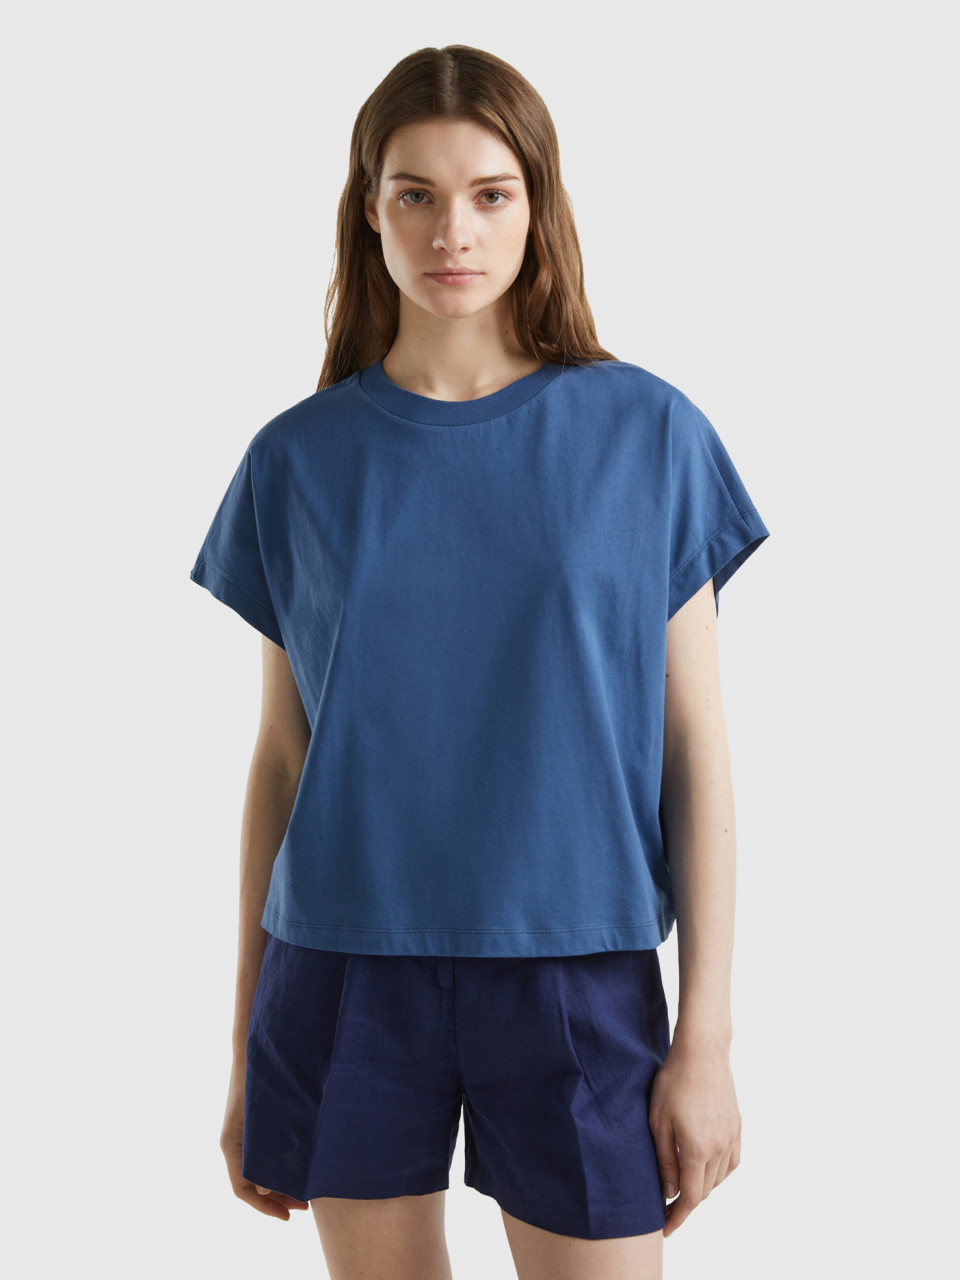 Benetton, Kimono Sleeve T-shirt, Air Force Blue, Women